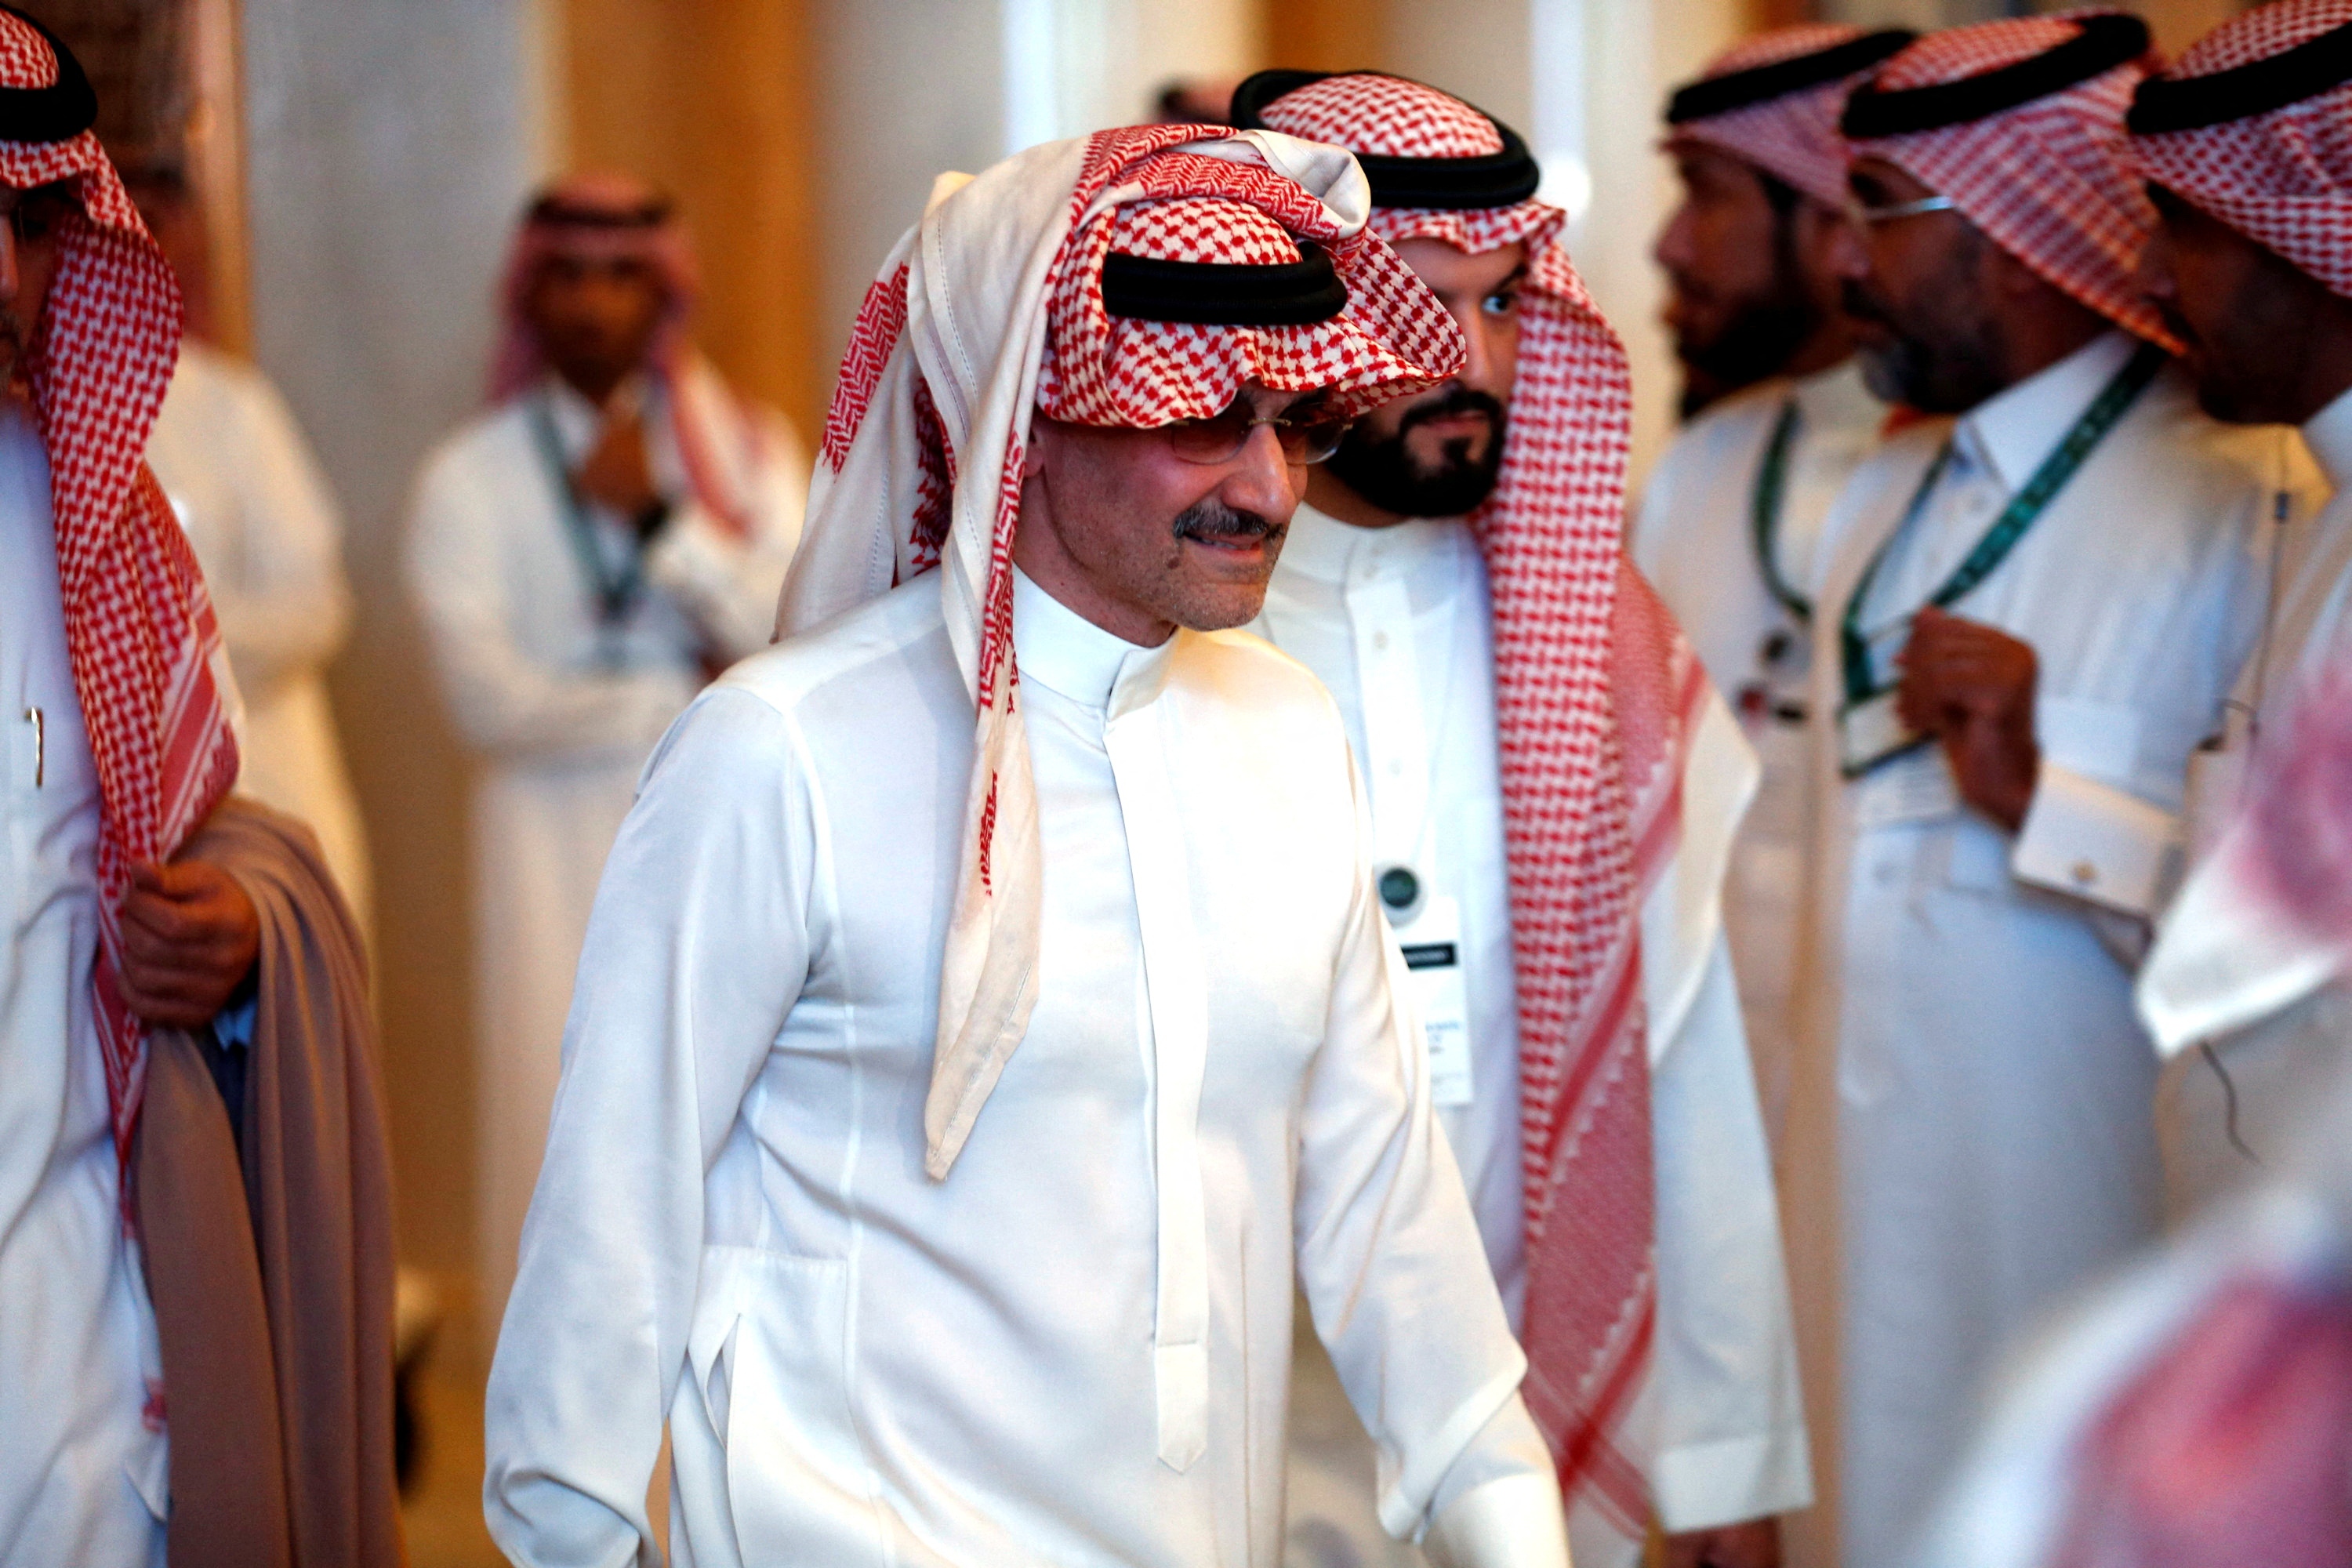 Saudi Arabian billionaire Prince Alwaleed bin Talal attends the investment conference in Riyadh